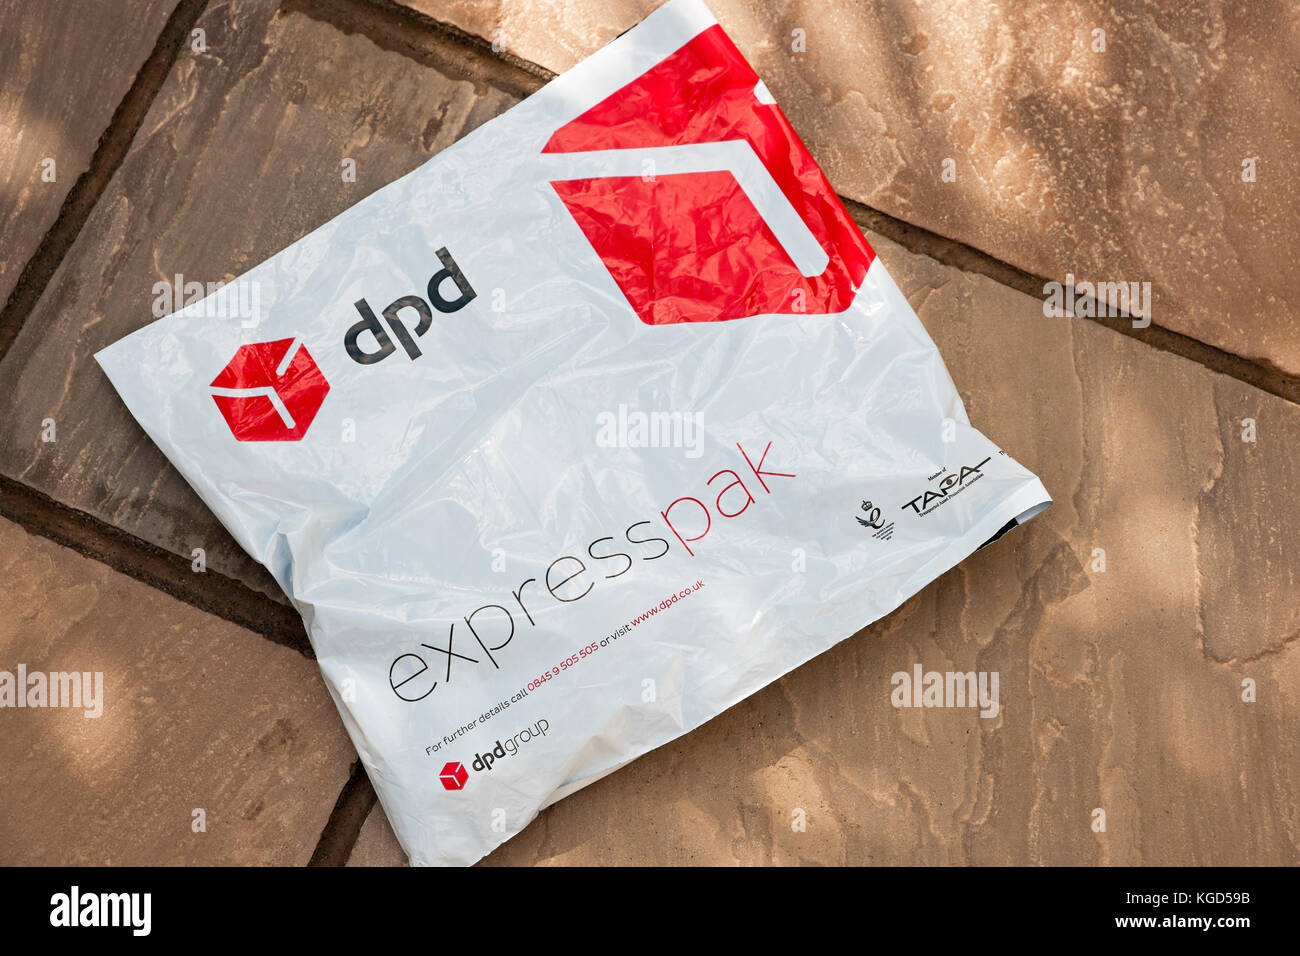 Dpd expresspak Paket Stockfotografie - Alamy